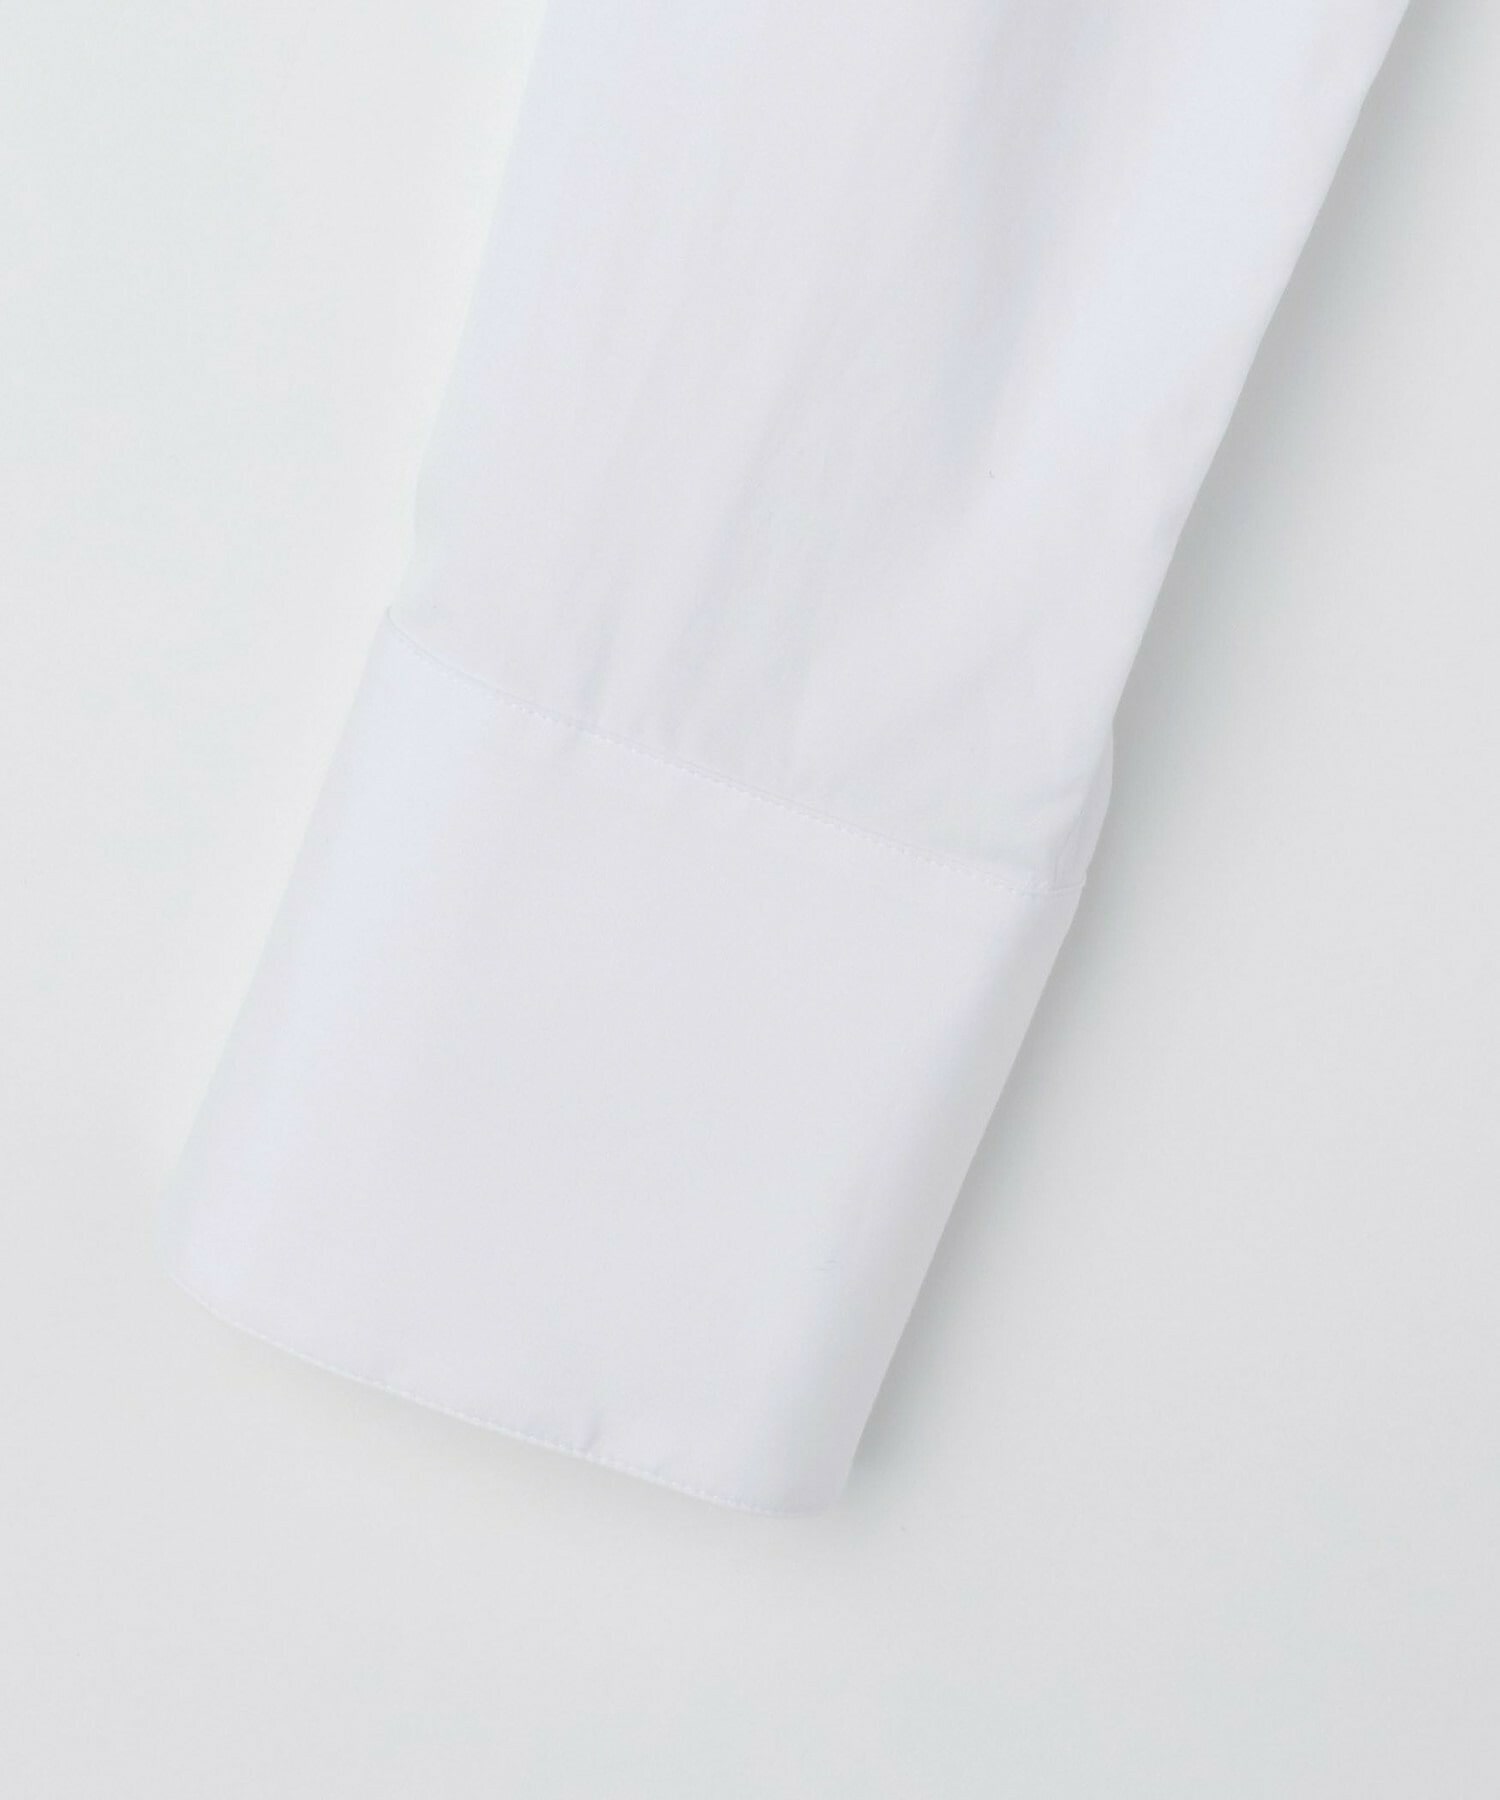 【L'EQUIPE】【Lサイズ】120/2ブロードシャツ 詳細画像 ホワイト 3